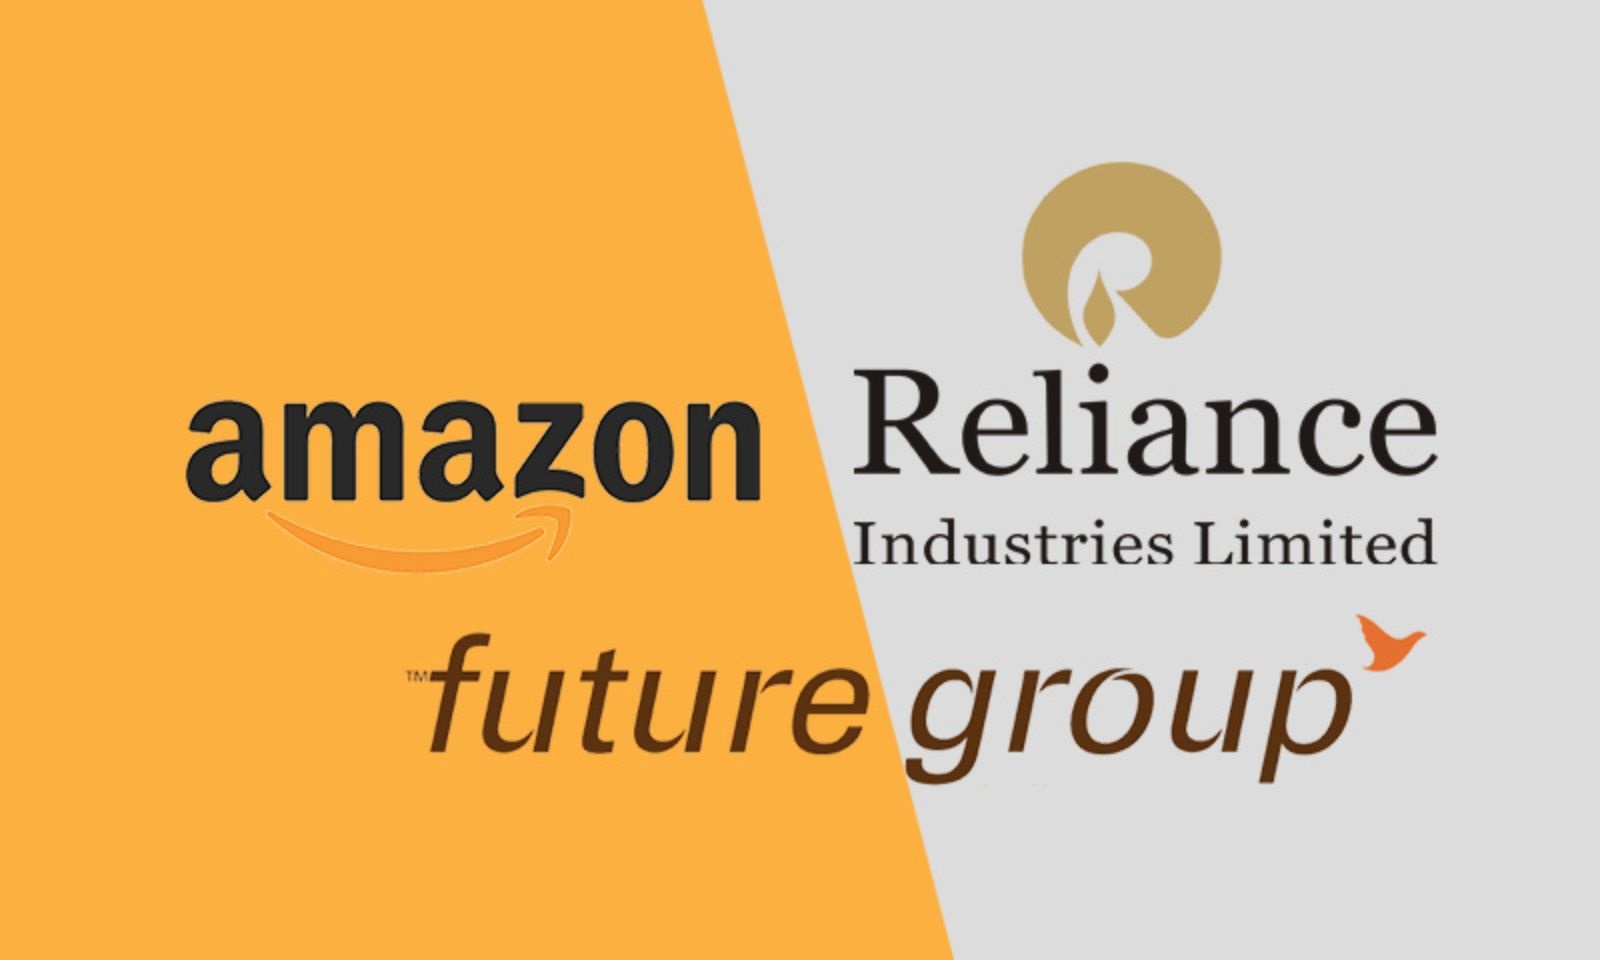 amazon-reliance-future-group